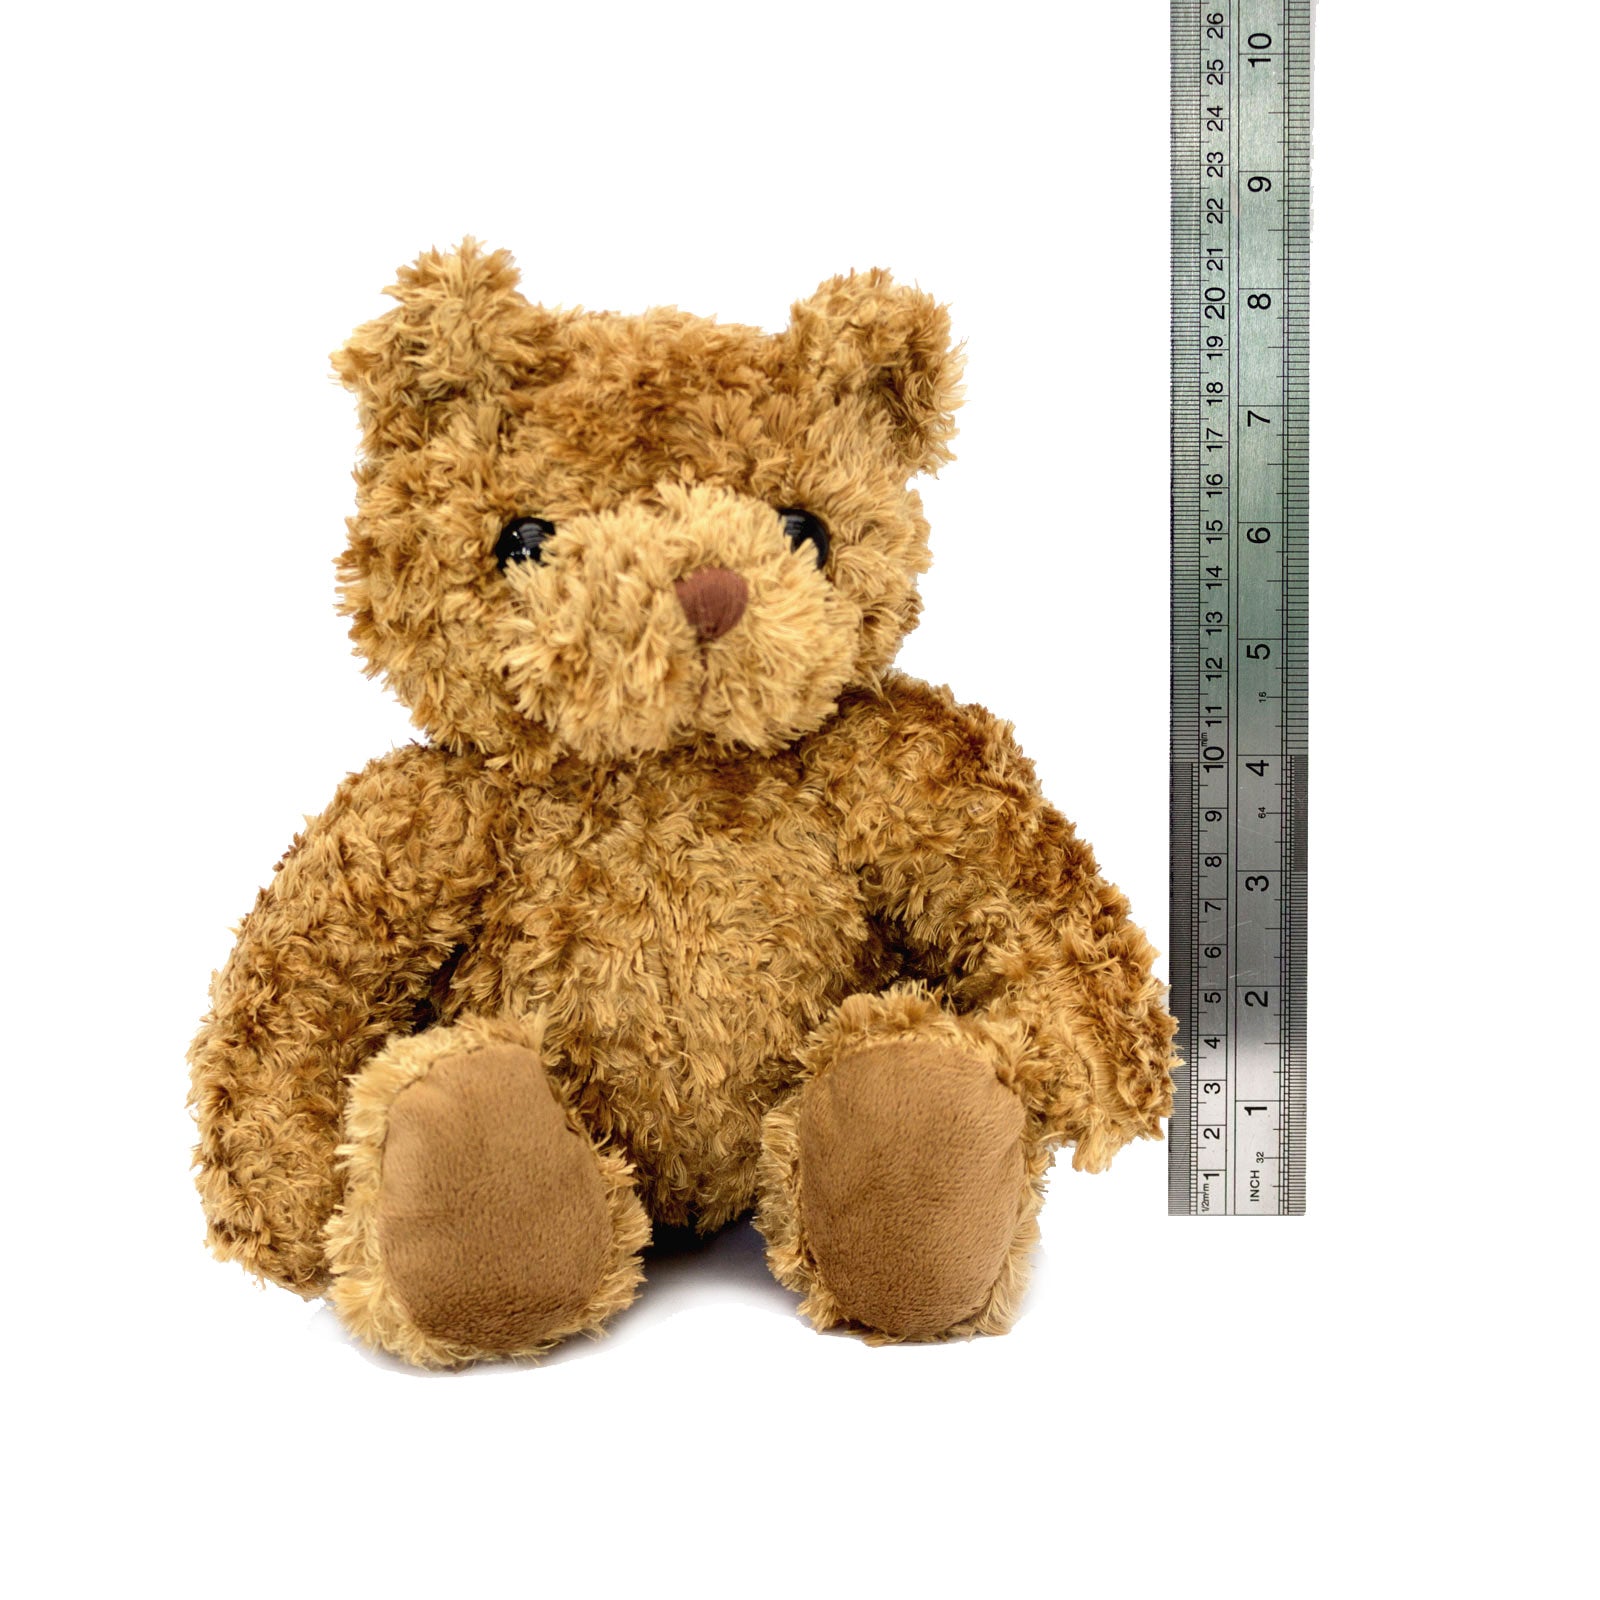 Get Well Soon Evaline - Teddy Bear